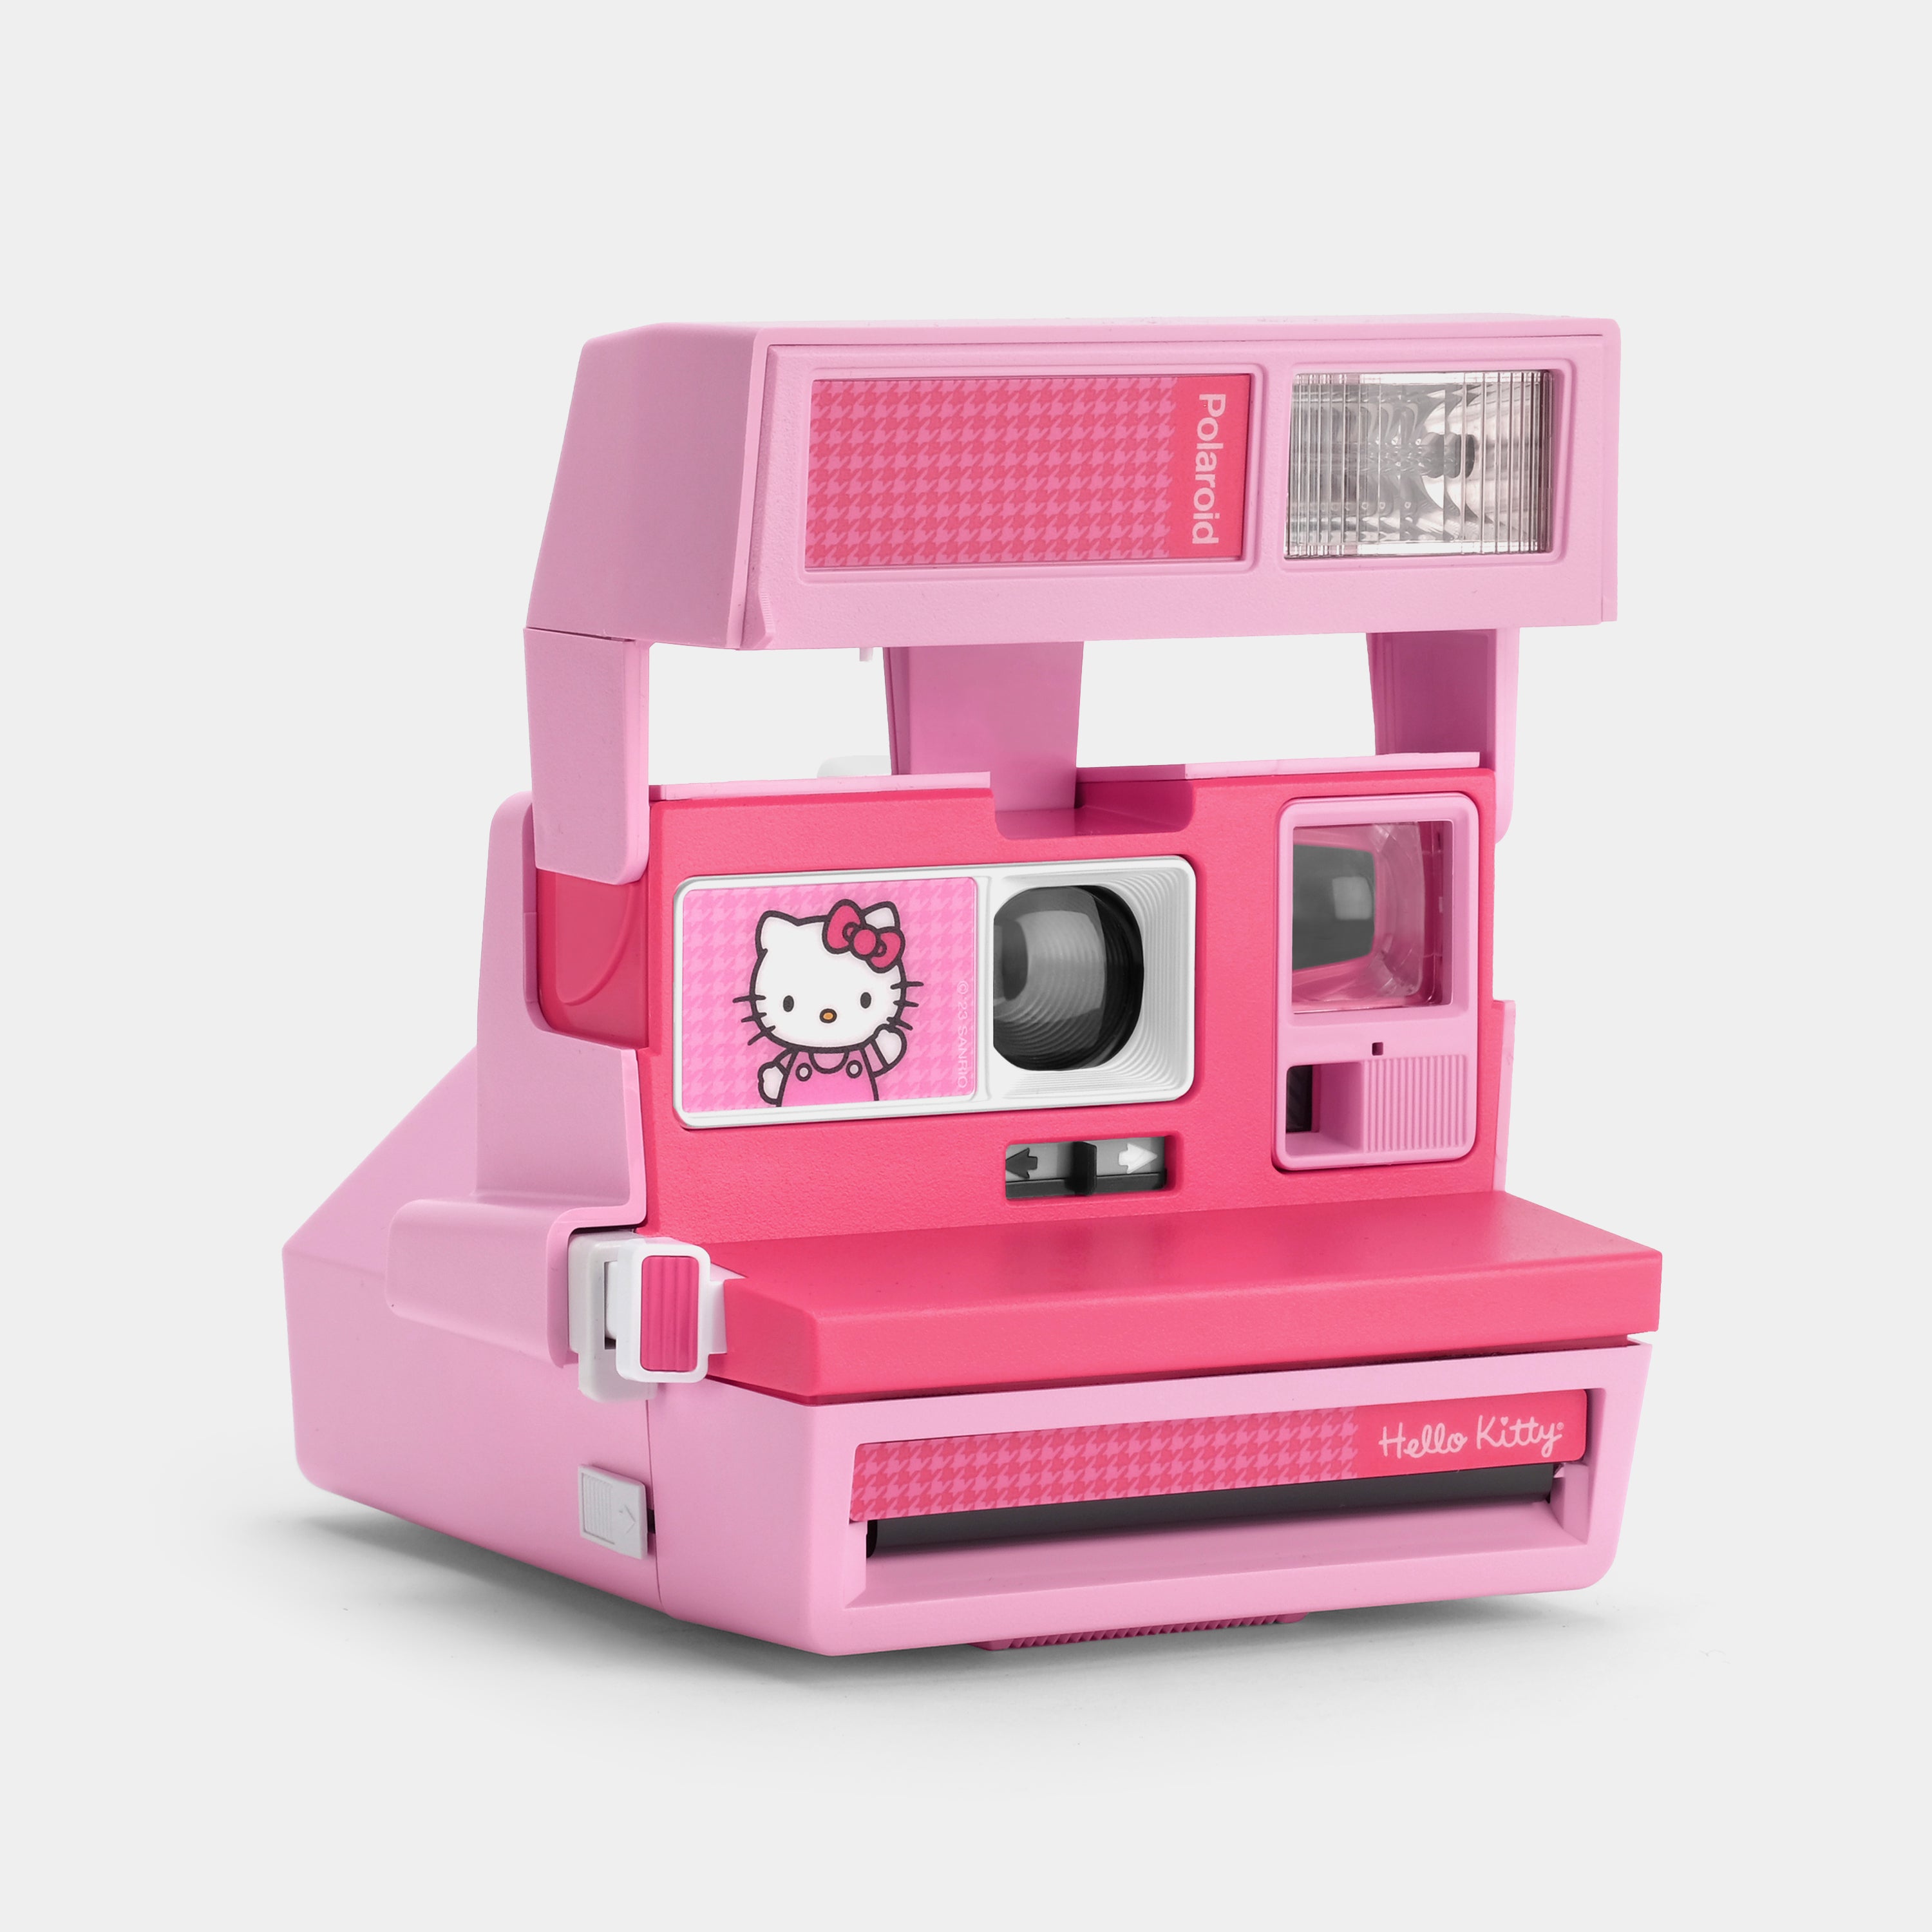 Polaroid 600 Hello Kitty Perfectly Pink Instant Film Camera